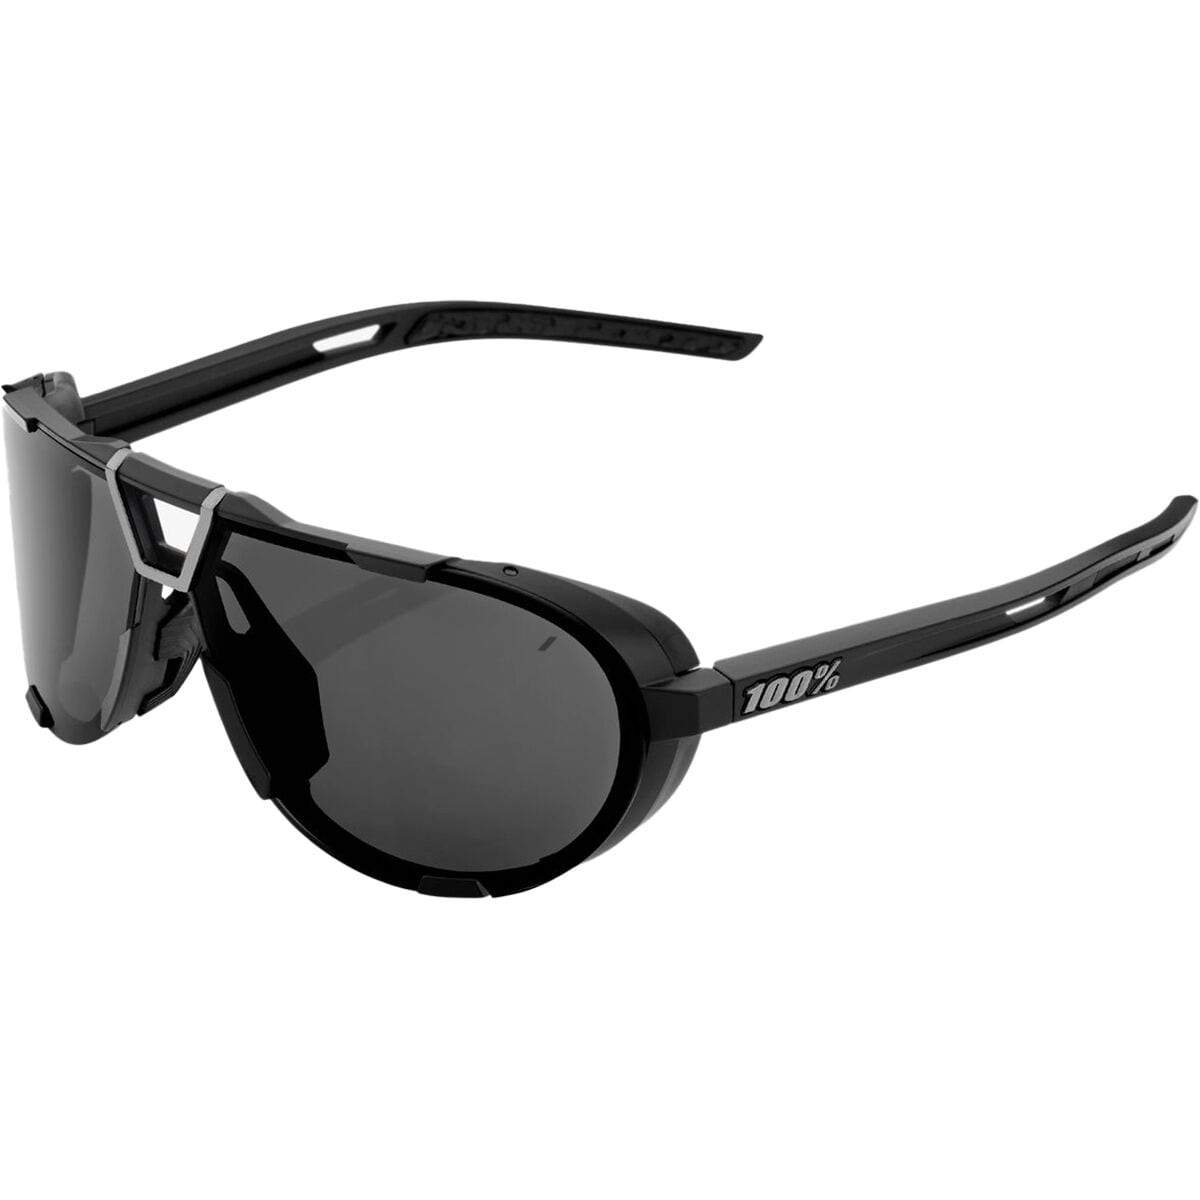 100% Westcraft Sunglasses - Men's